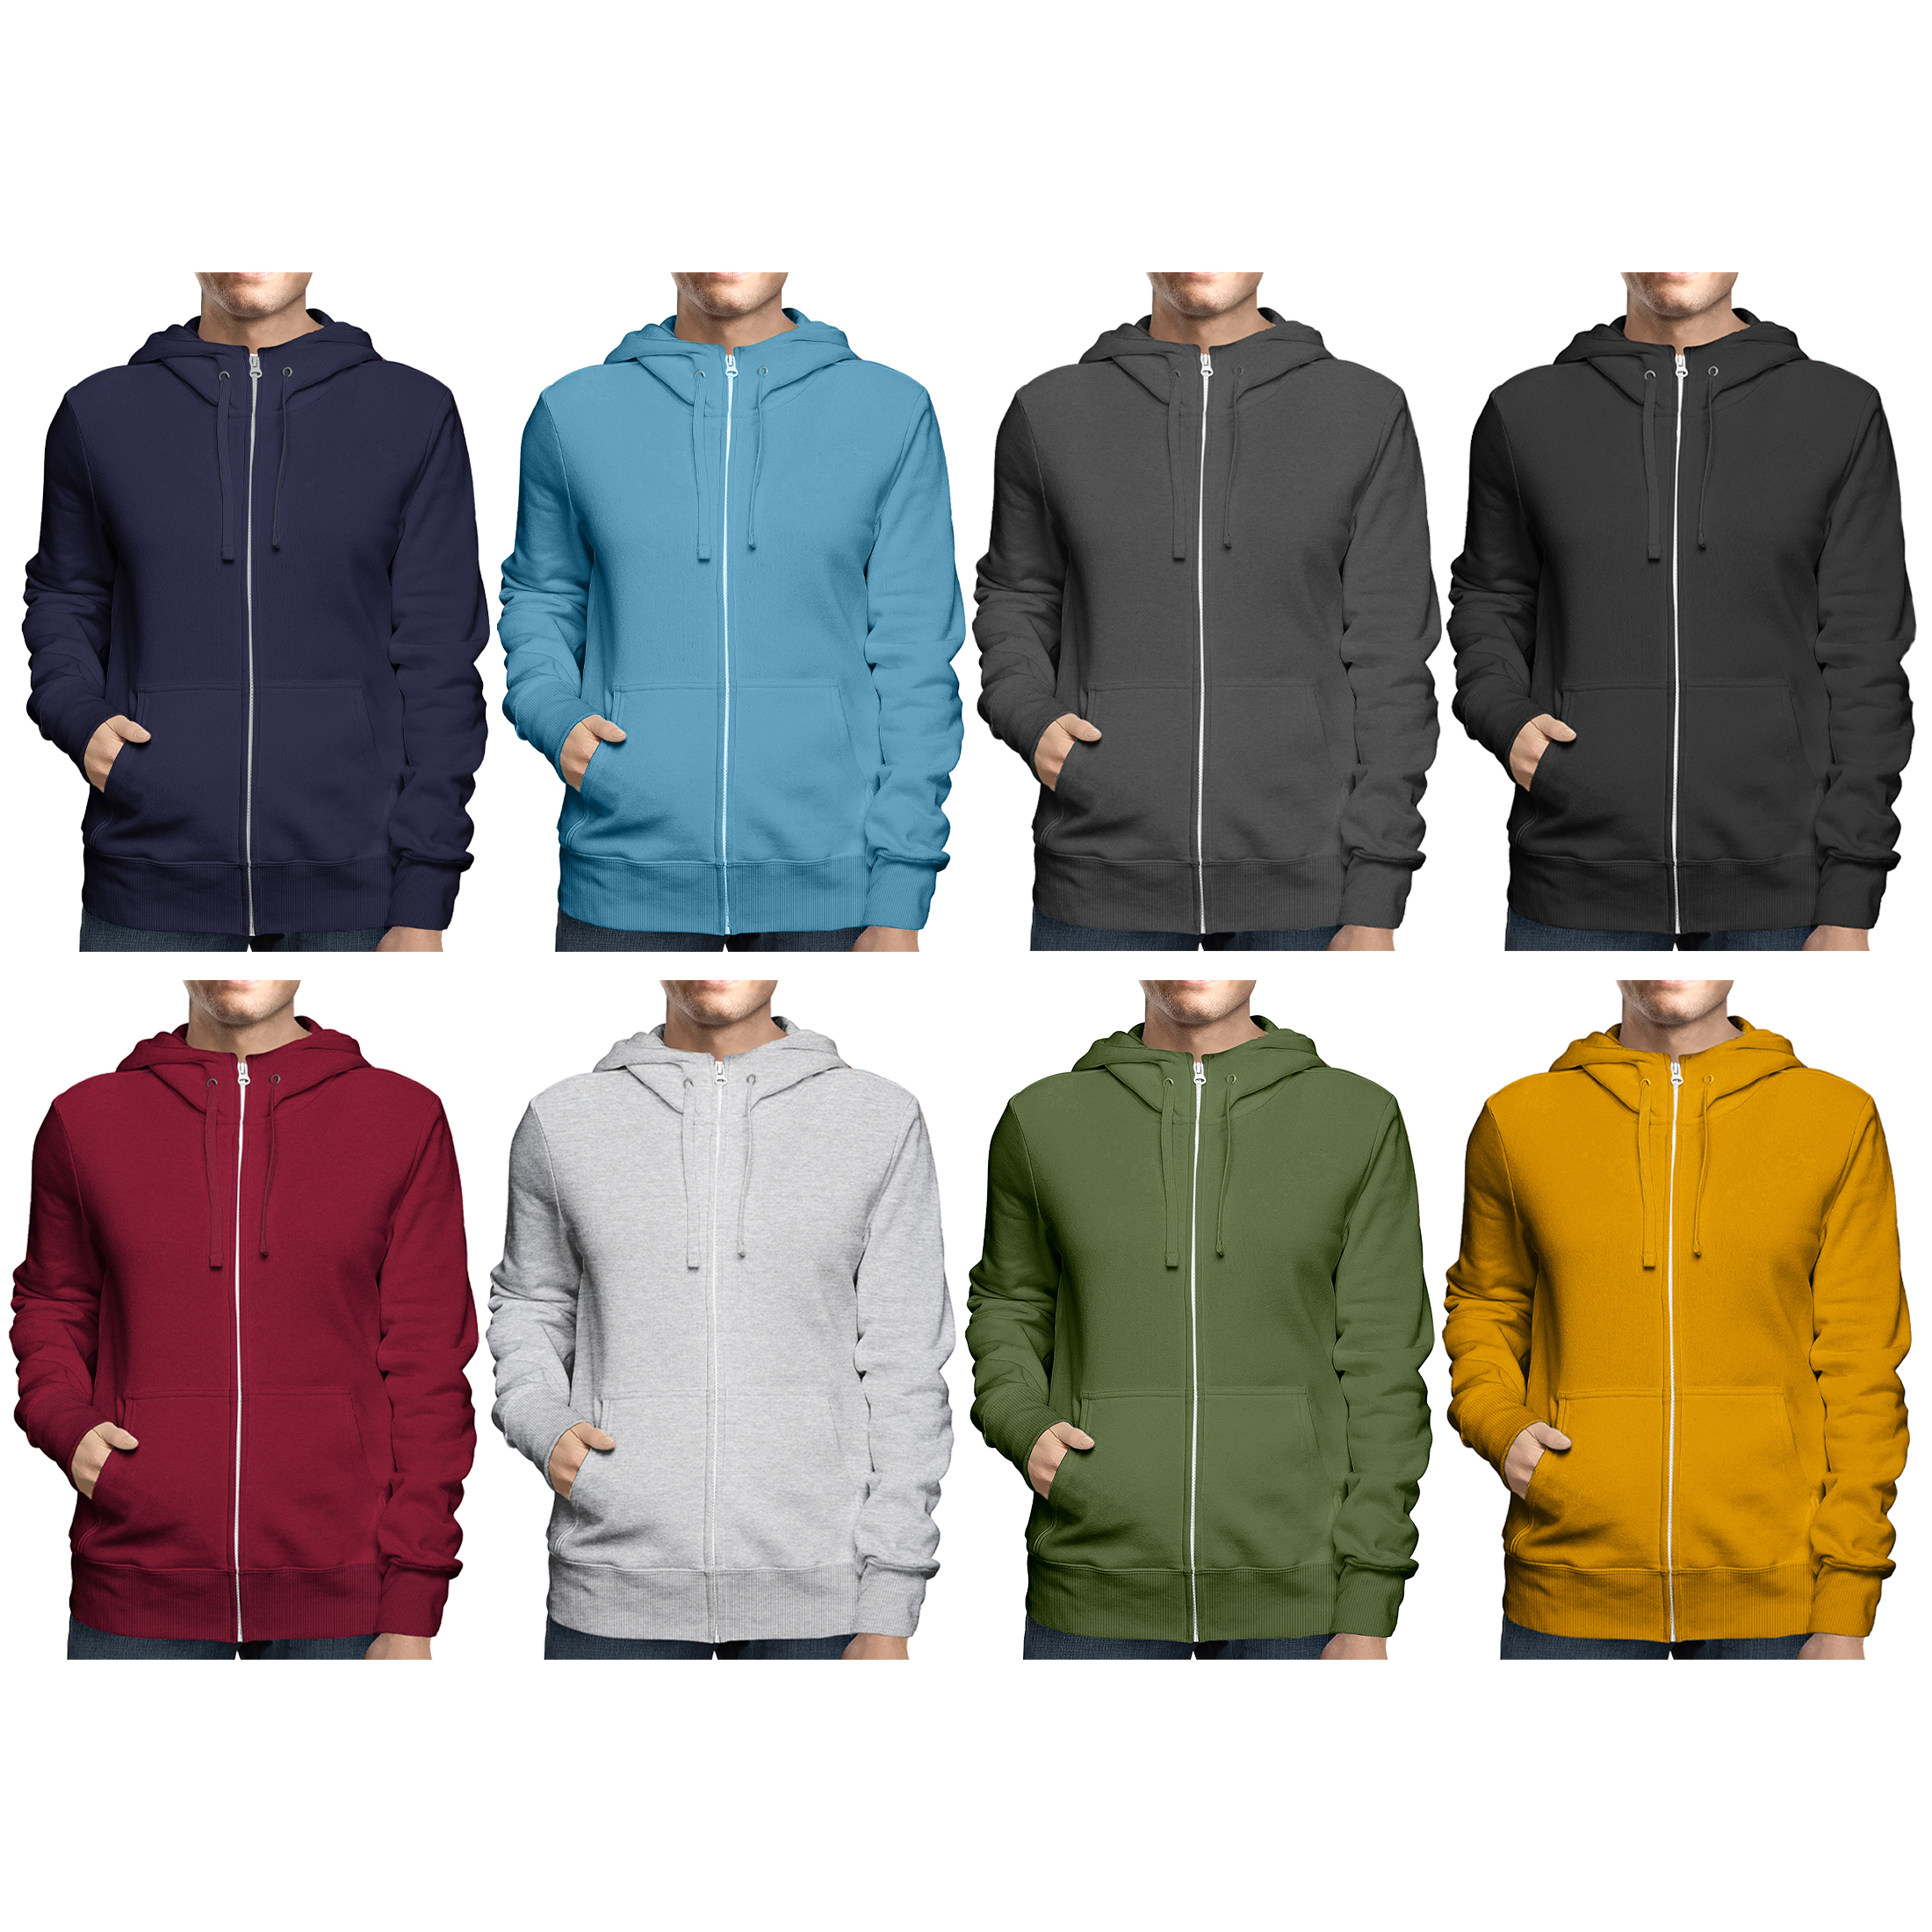 2-Pack: Men's Full Zip Up Fleece-Lined Hoodie Sweatshirt (Big & Tall Size Available) - Black & Olive, Medium